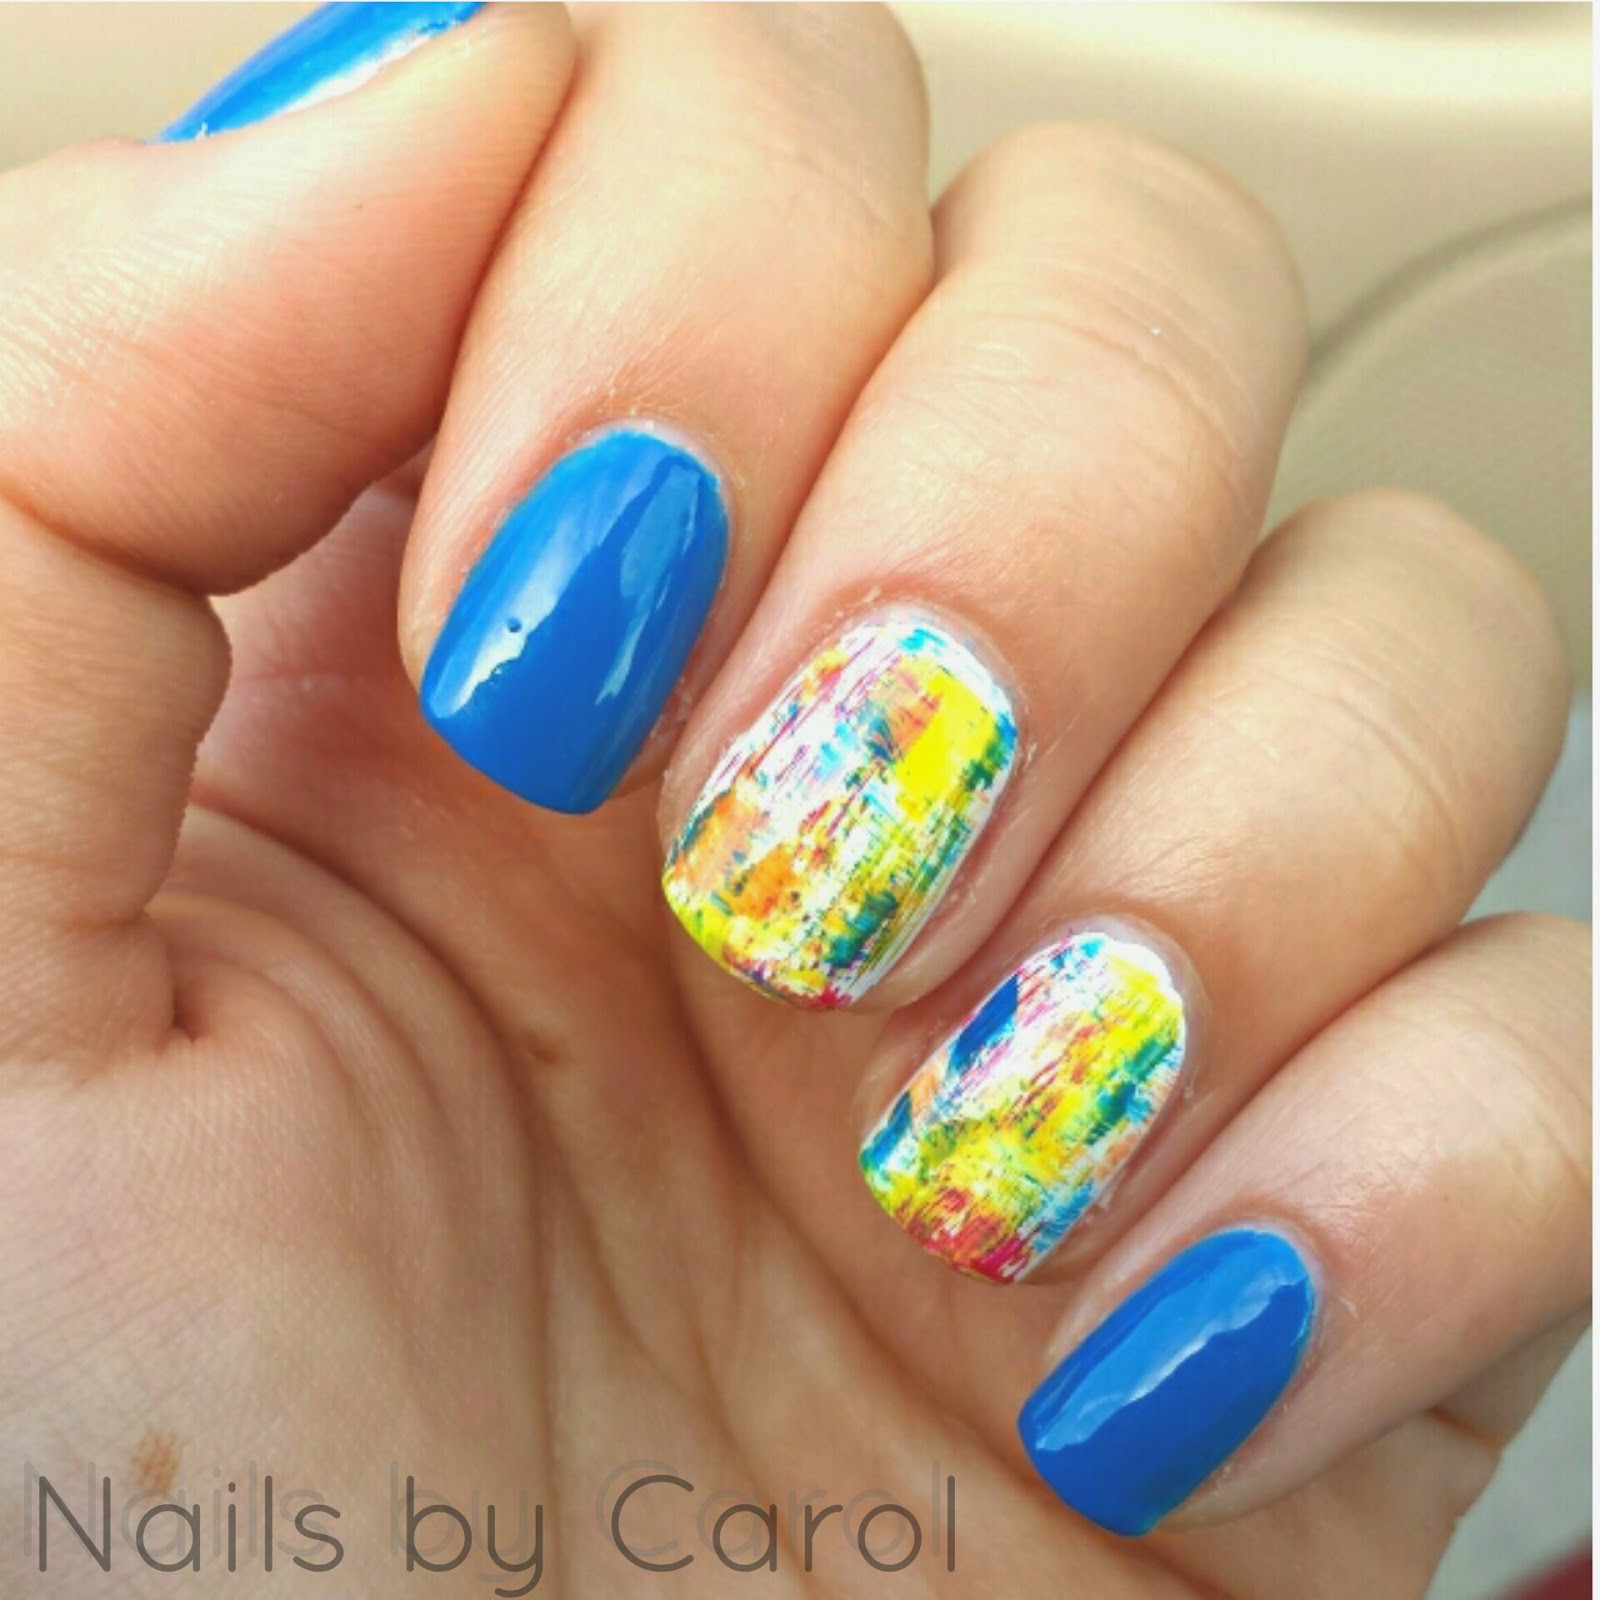 Nails by Carol